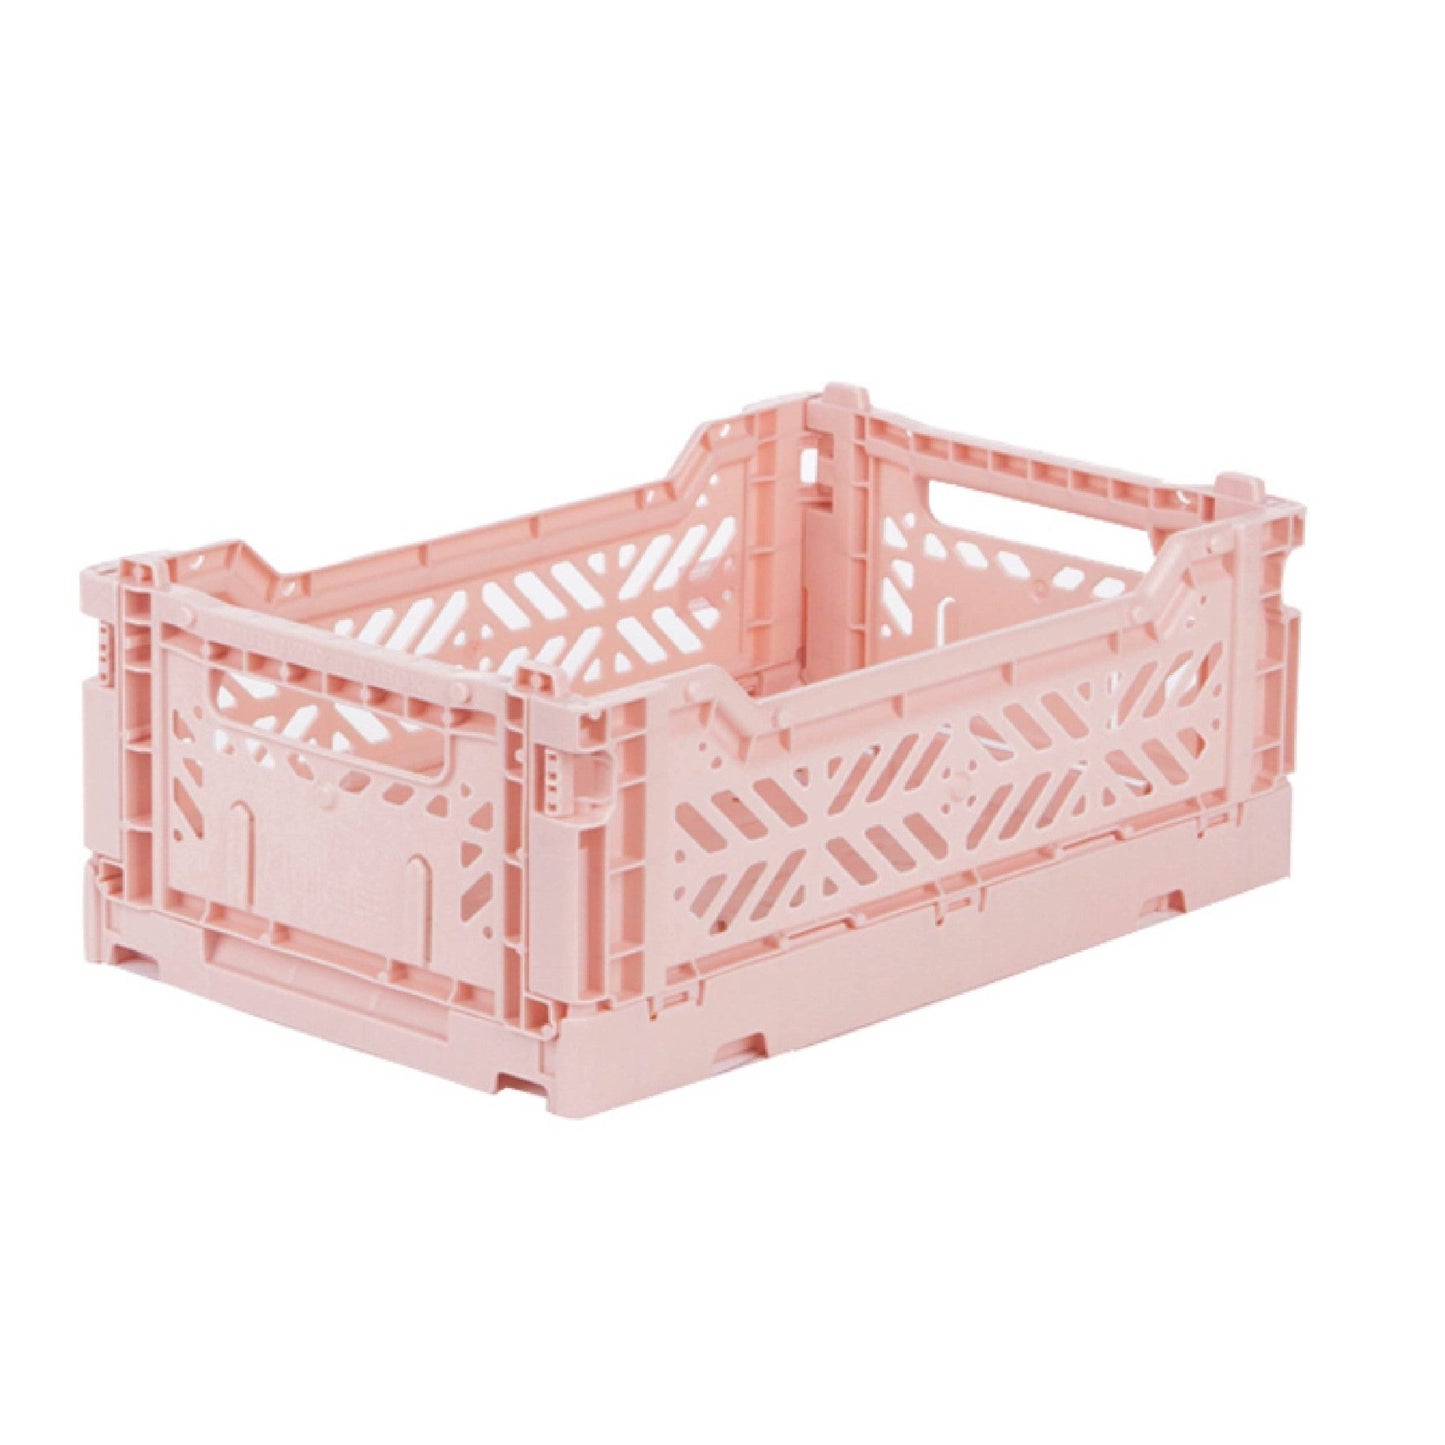 Aykasa | Mini Foldable Crates - The Chic Habitat